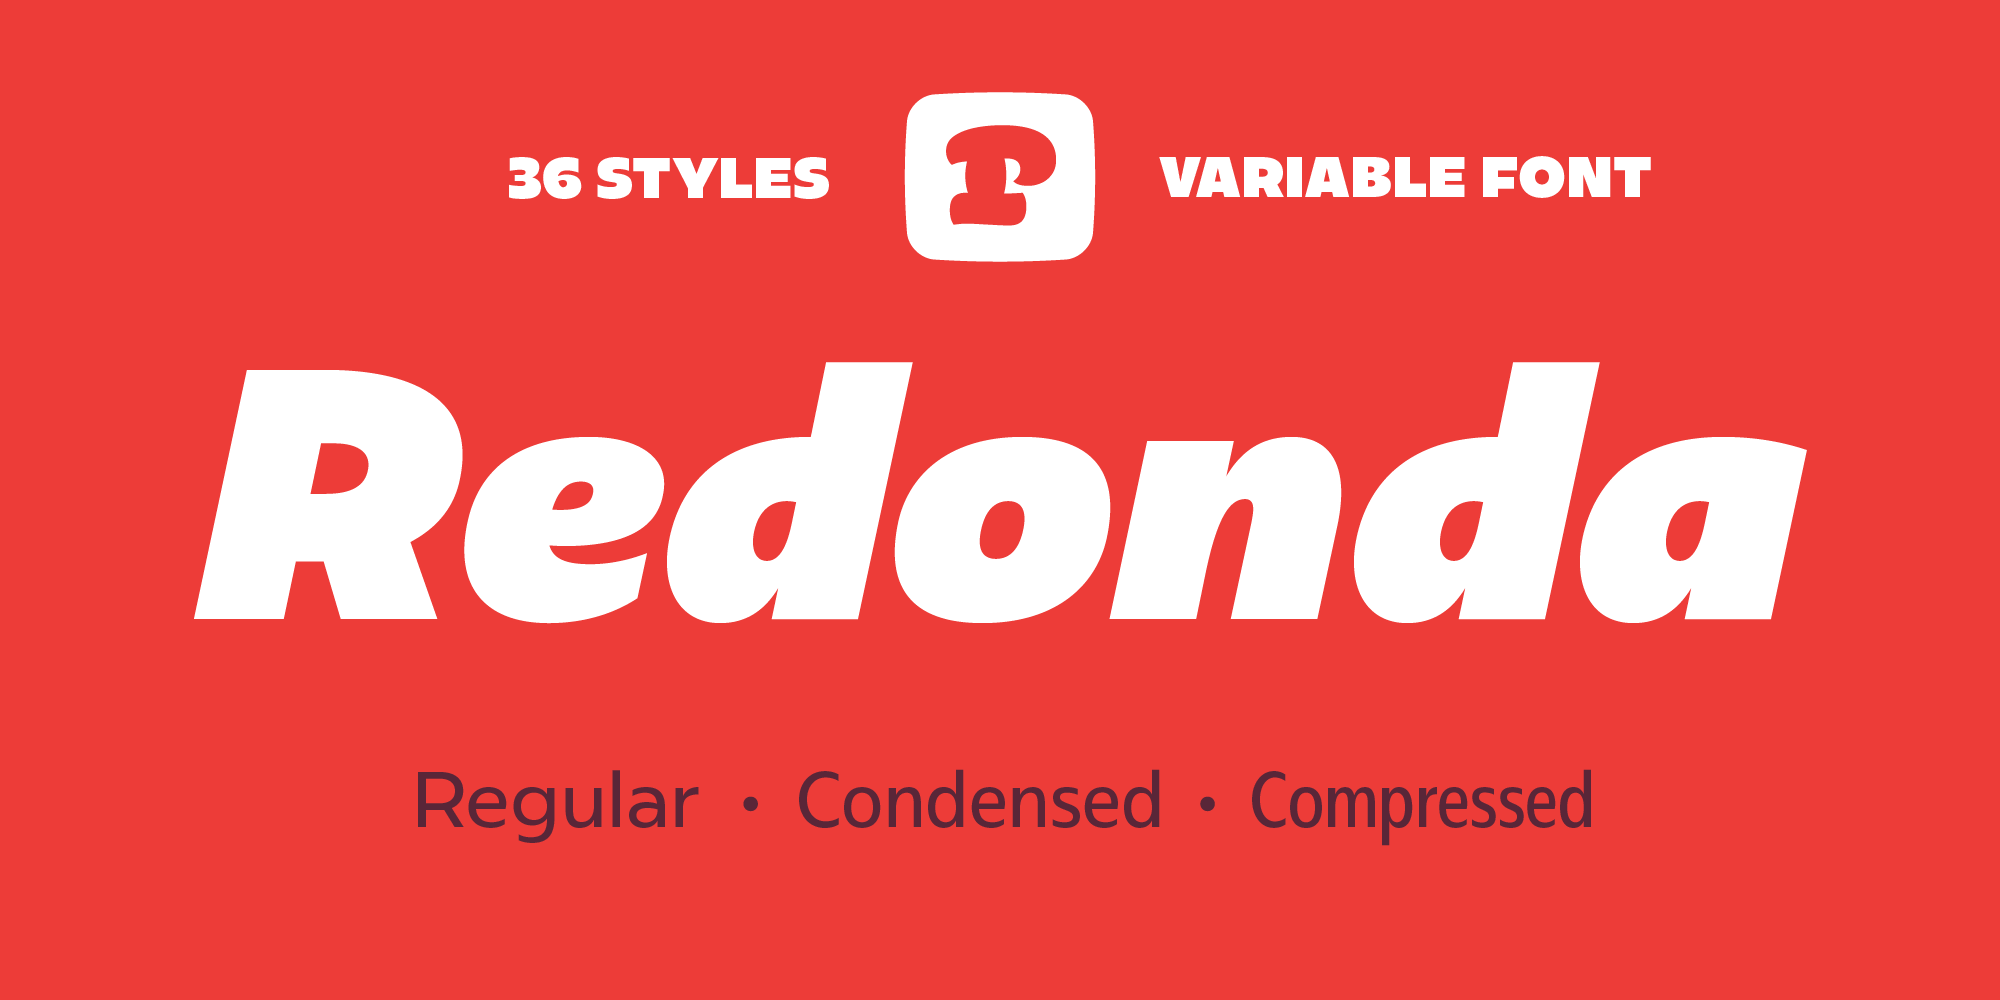 Card displaying Redonda typeface in various styles